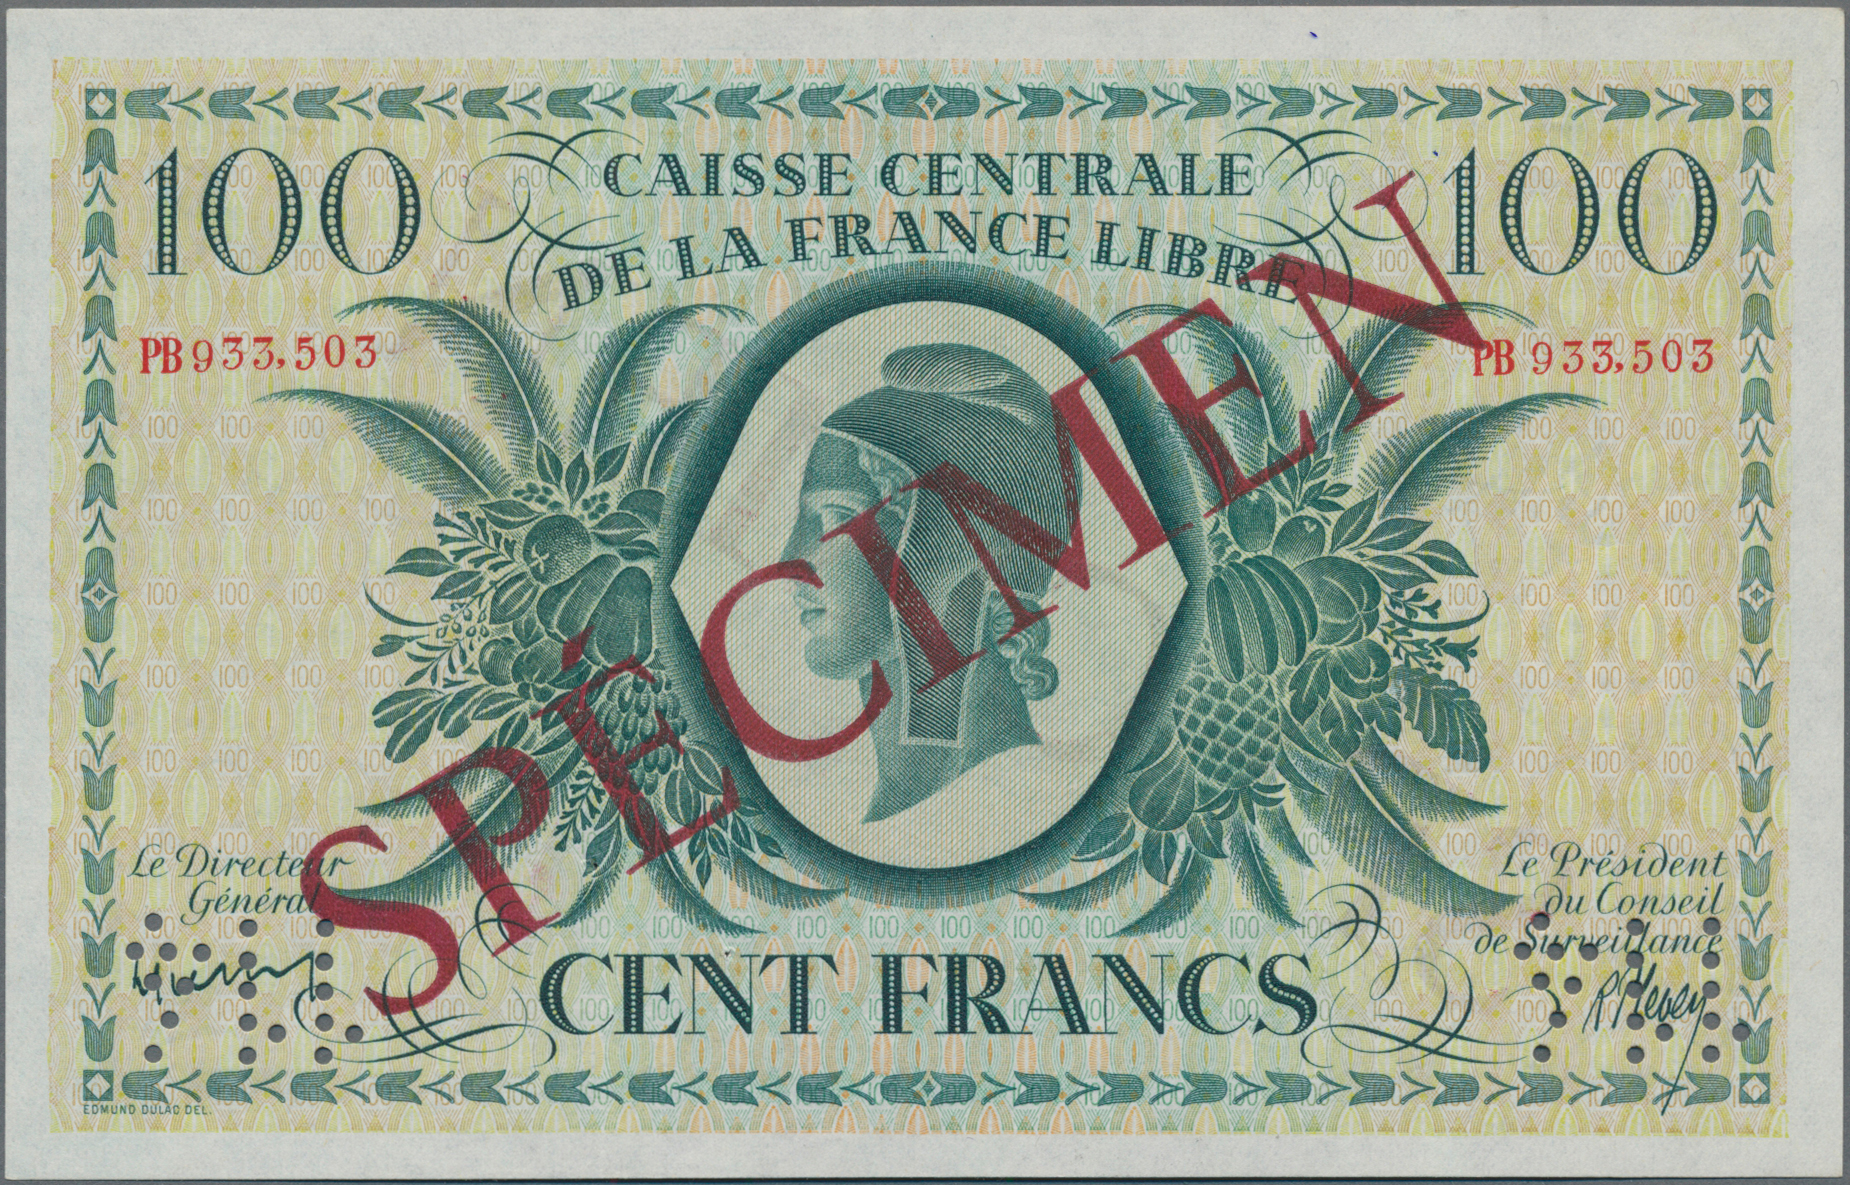 Lot 00204 - French Equatorial Africa / Französisch-Äquatorialafrika | Banknoten  -  Auktionshaus Christoph Gärtner GmbH & Co. KG 55th AUCTION - Day 1